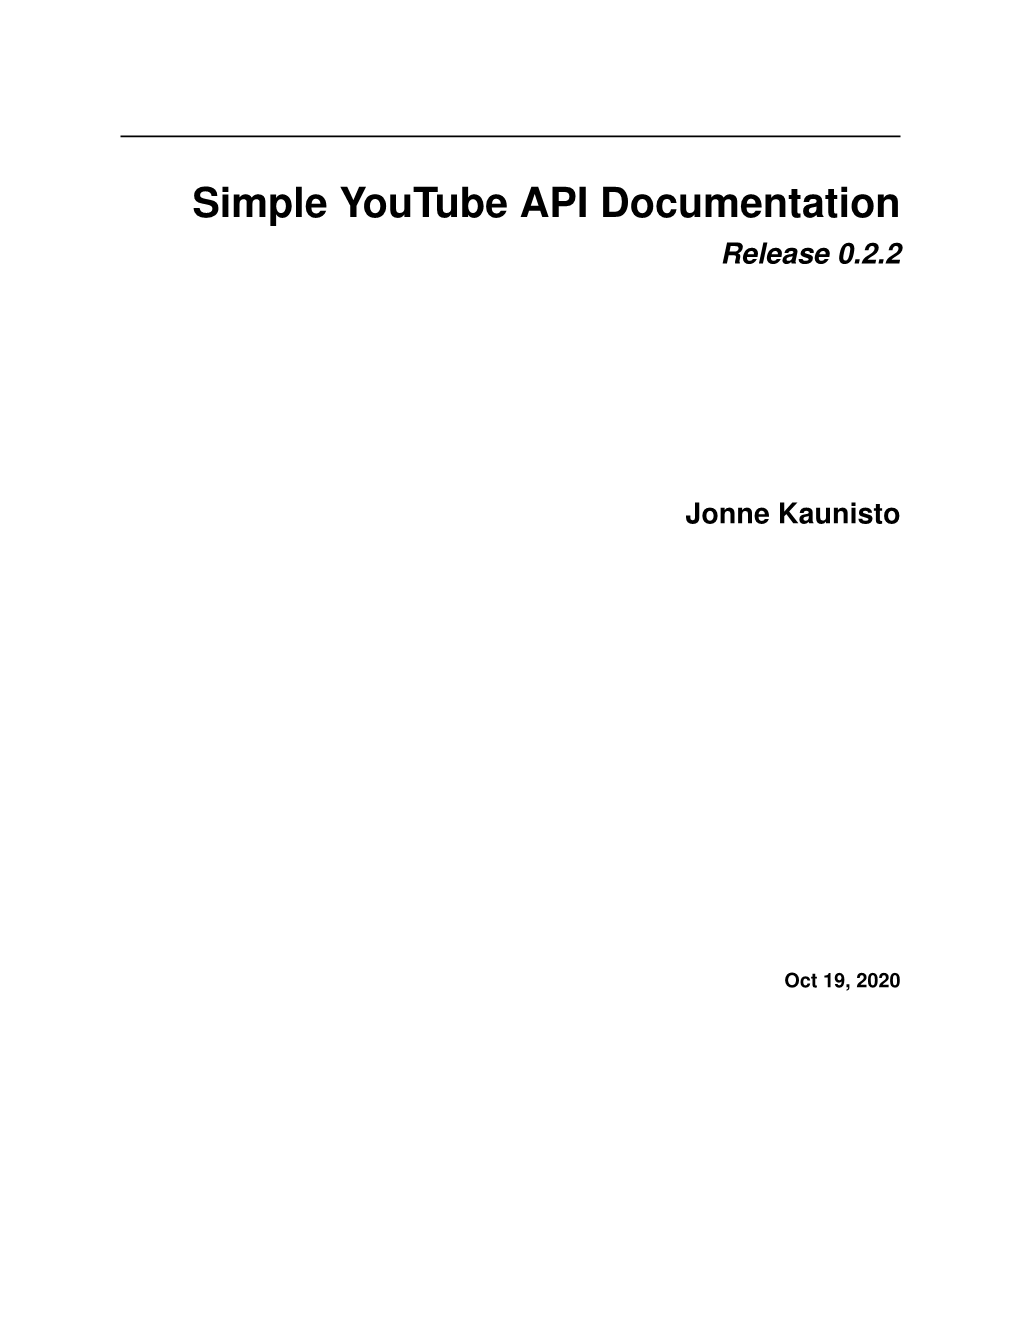 Simple Youtube API Documentation Release 0.2.2 Jonne Kaunisto